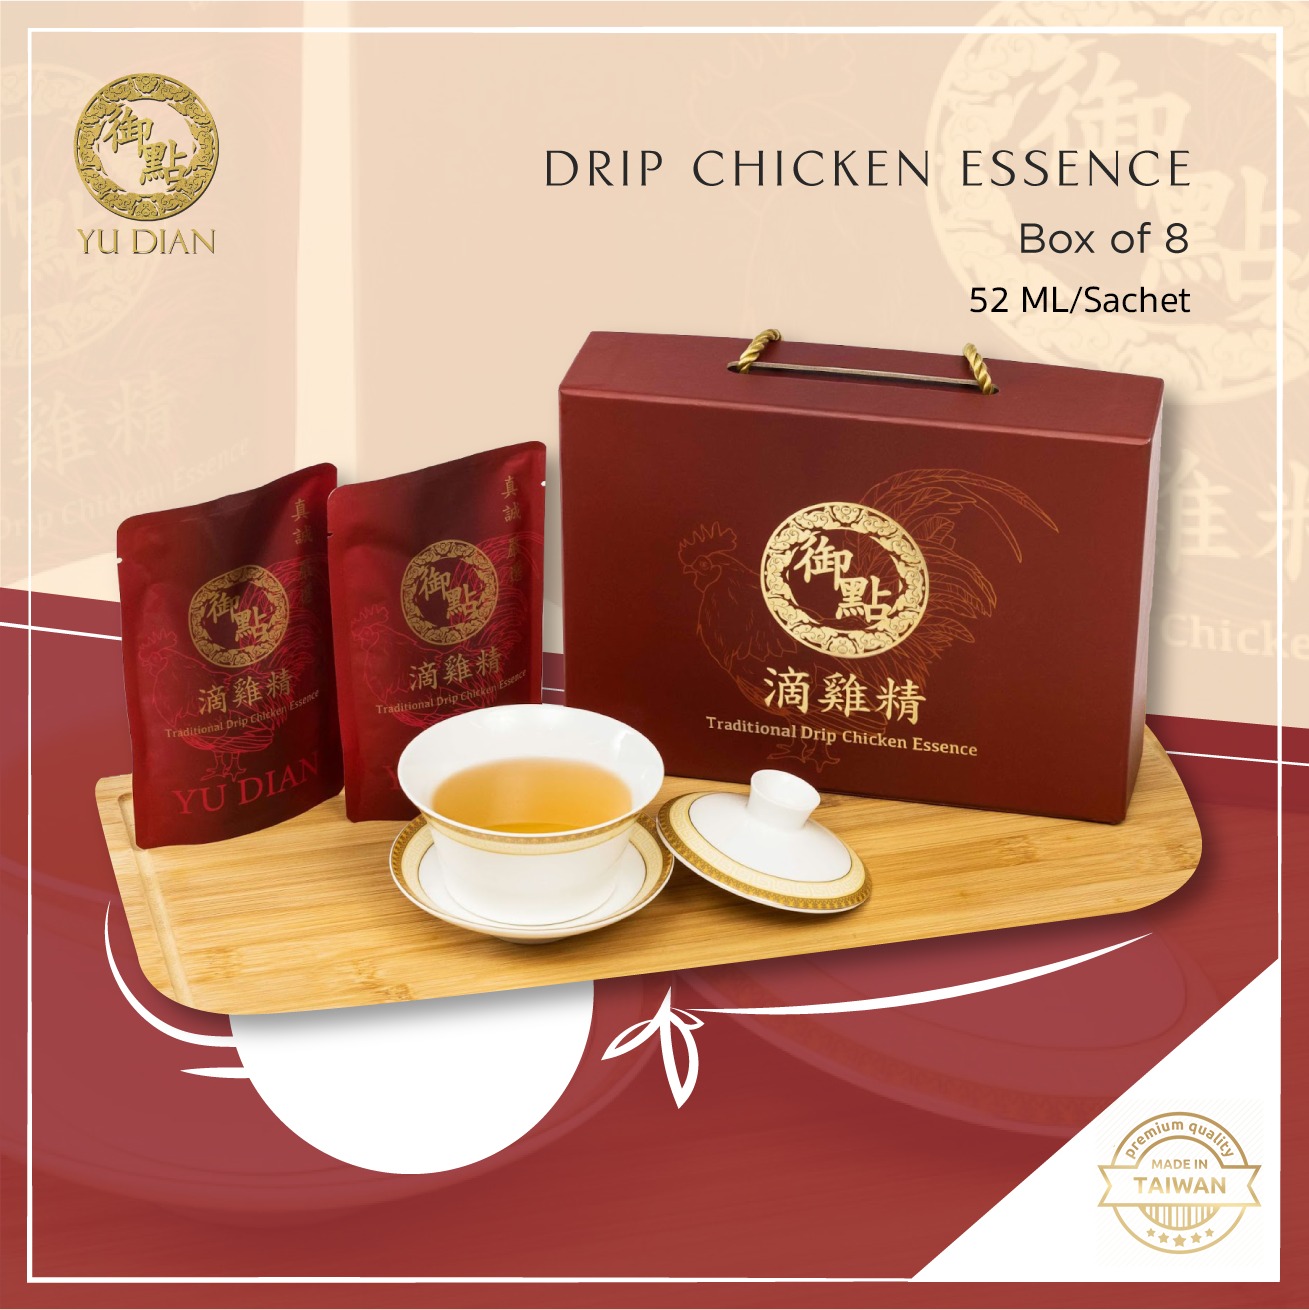 Yu Dian Drip Chicken Essence Box of 8